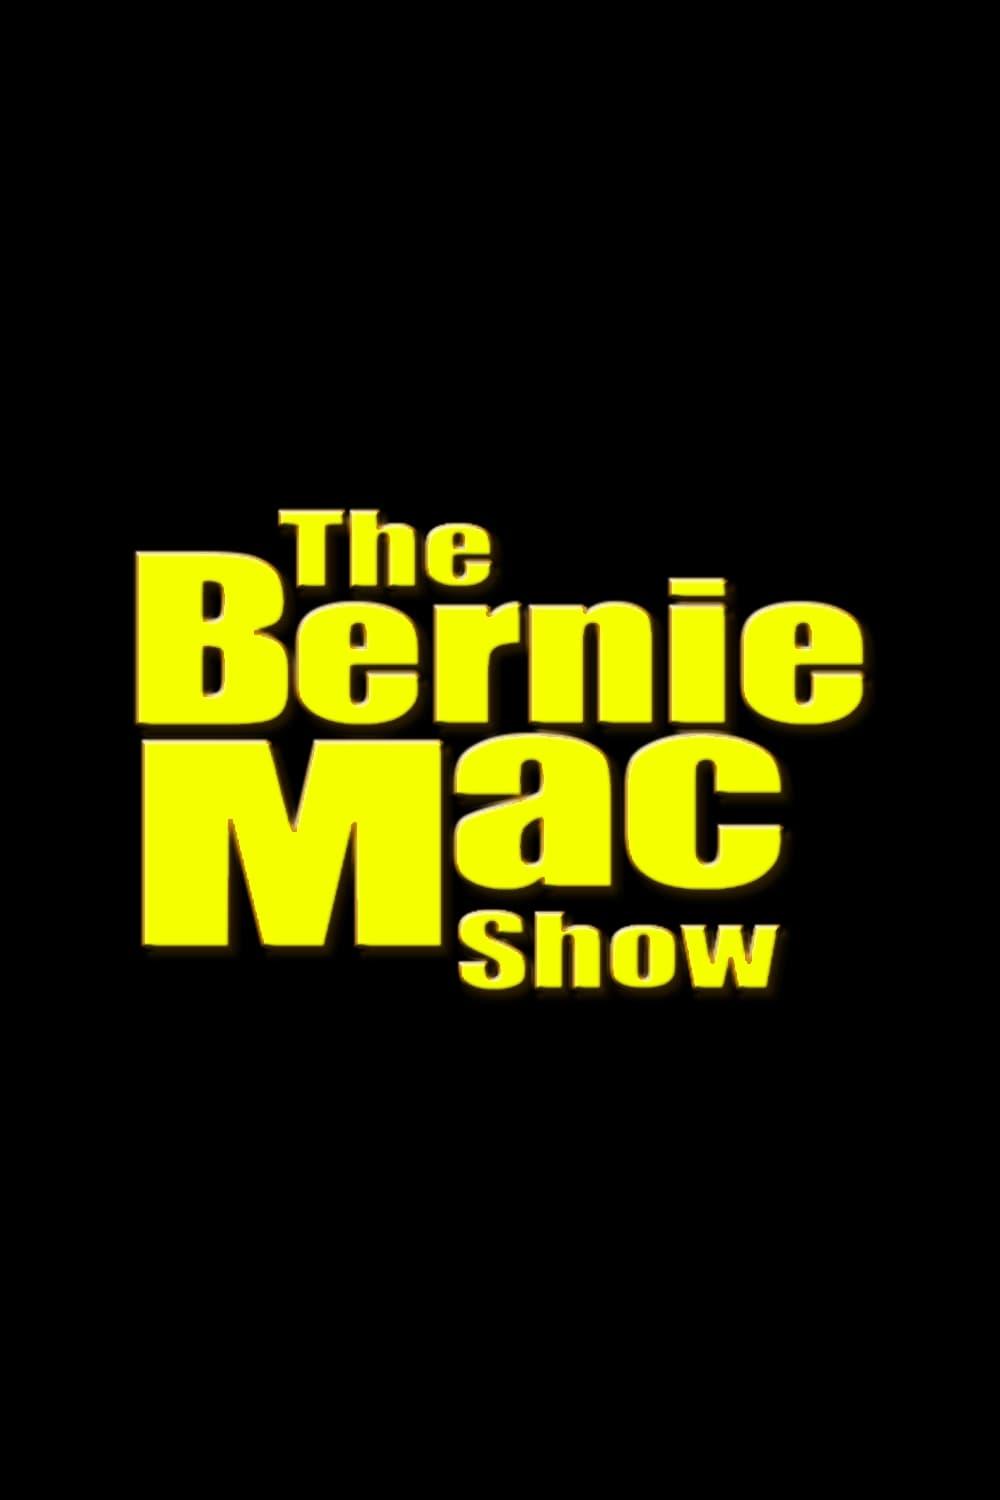 The Bernie Mac Show poster